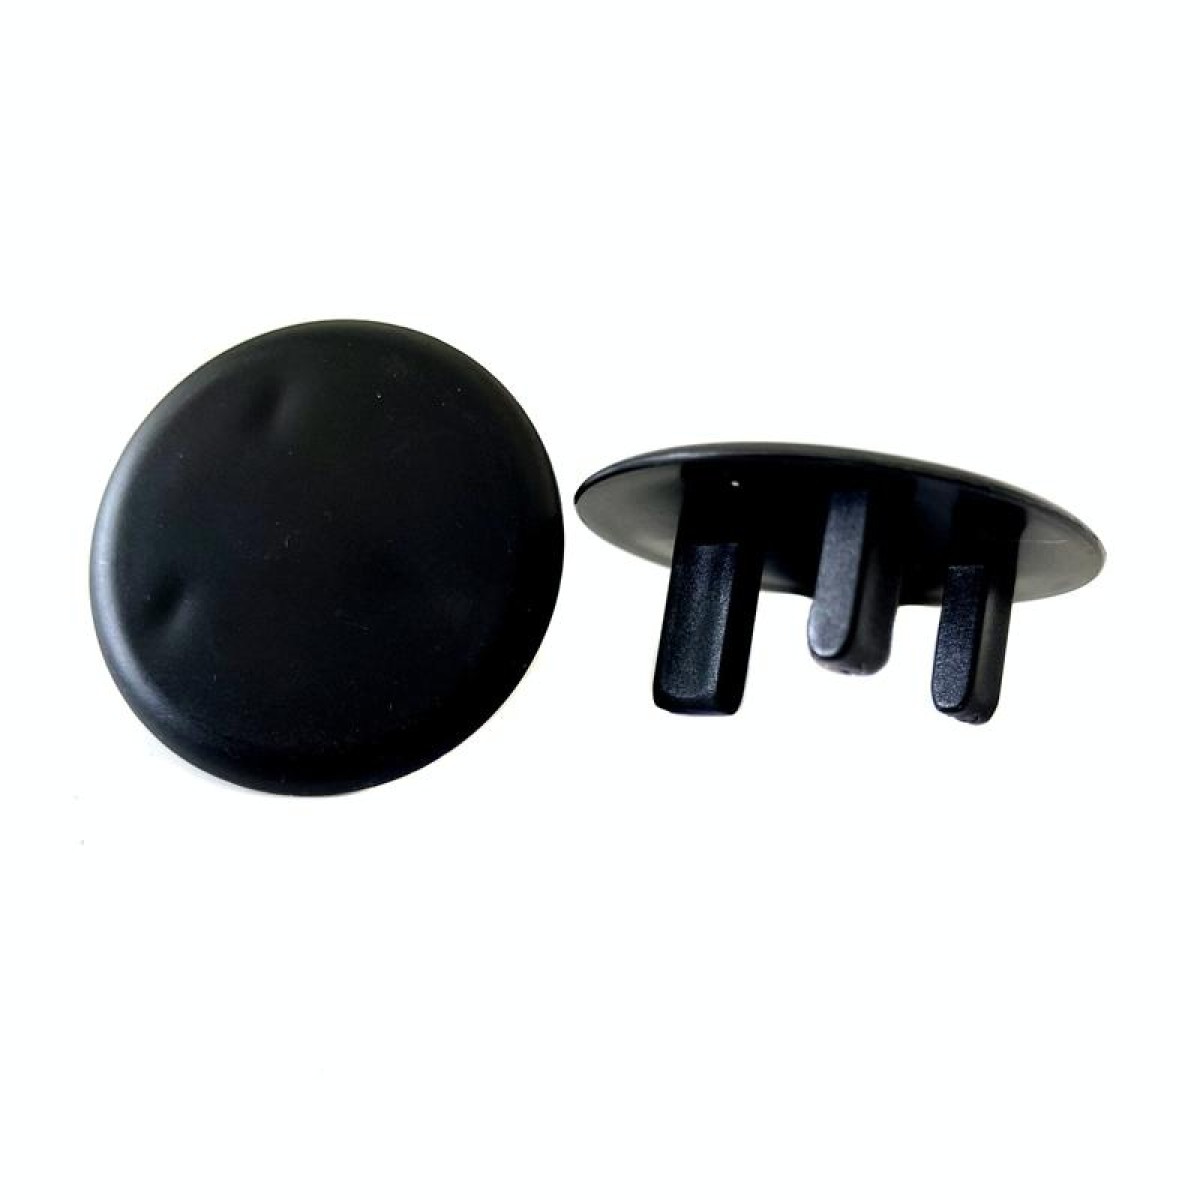 UK 3-Hole Baby Socket Protection Cover, Style: Round Thin Black